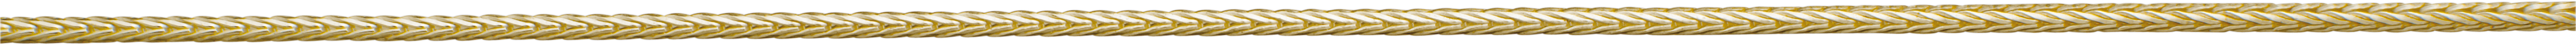 Fox tail chain gold 750/-Gg Ø 1,15mm